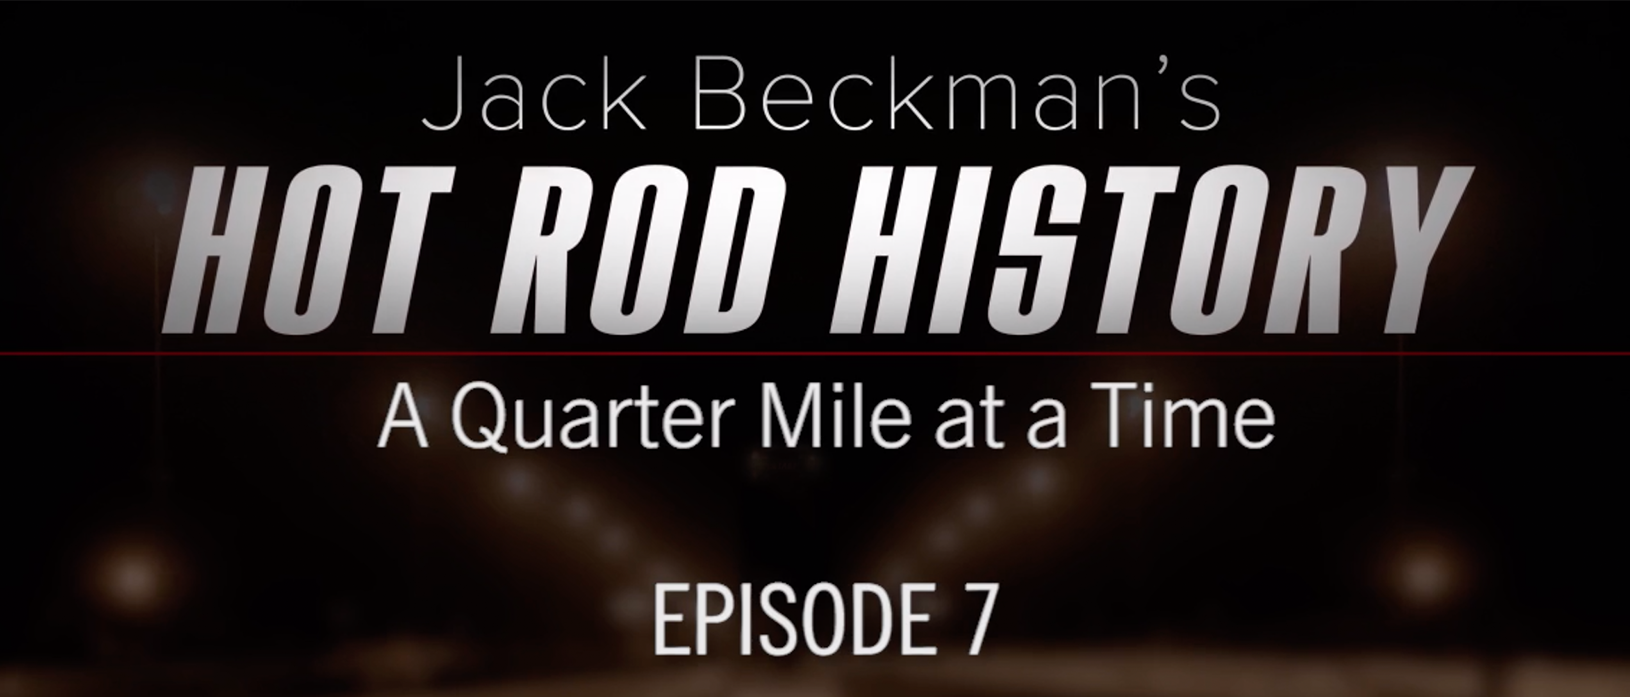 Jack Beckman’s Hot Rod History a Quarter-Mile at a Time – Episode 7